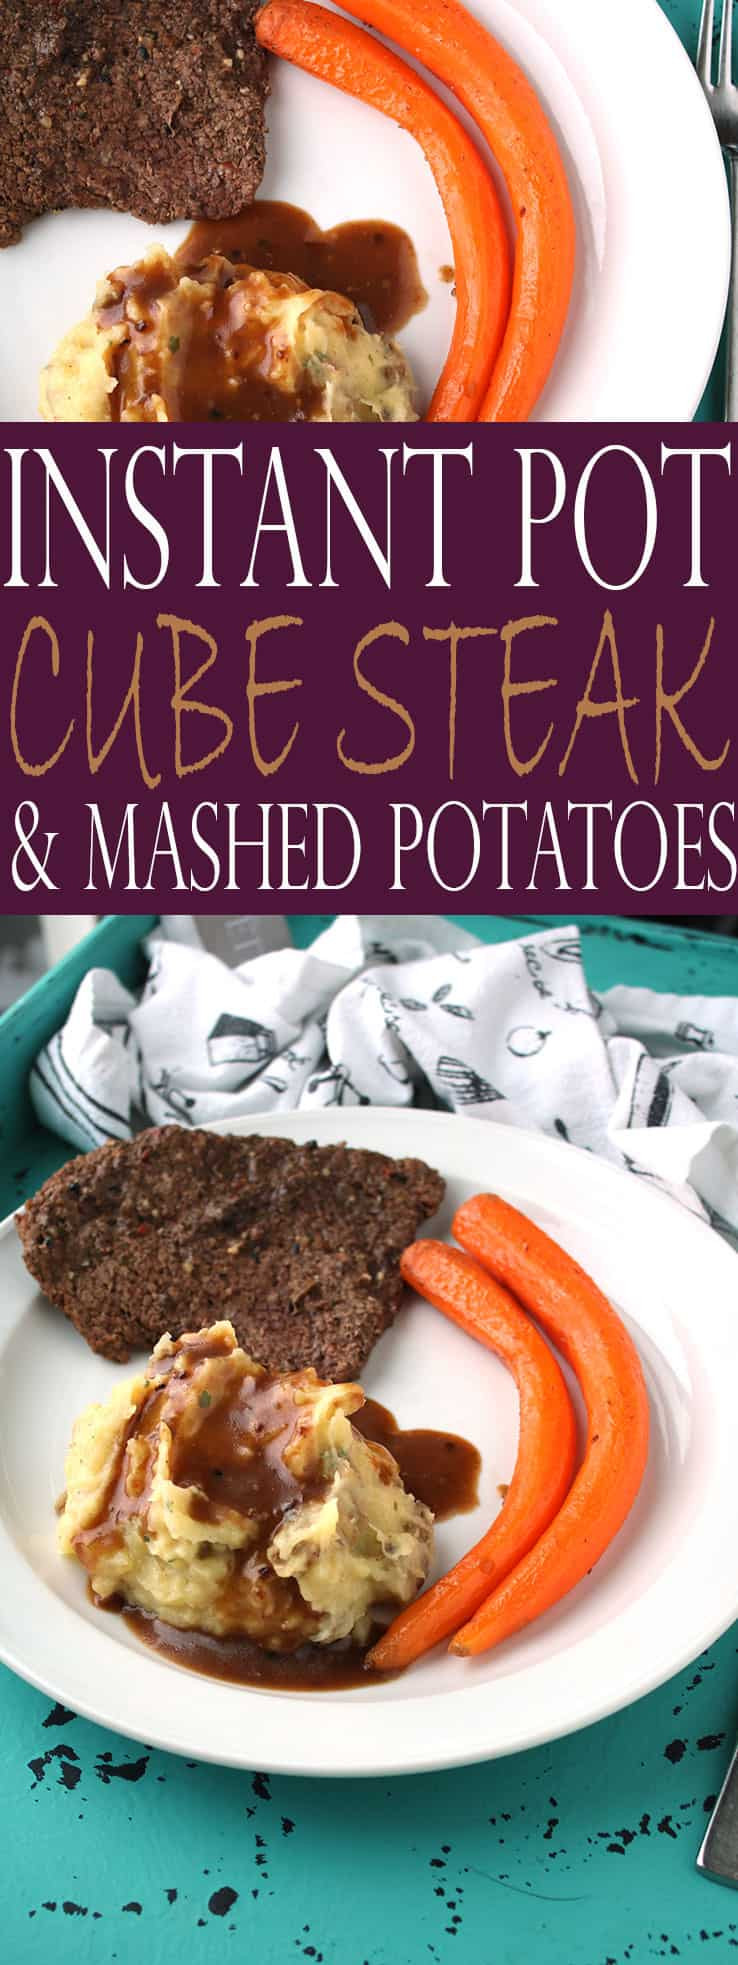 Instant Pot Sweet Potato Cubes
 Instant Pot Cube Steak & Mashed Potatoes Cube Steak Recipes